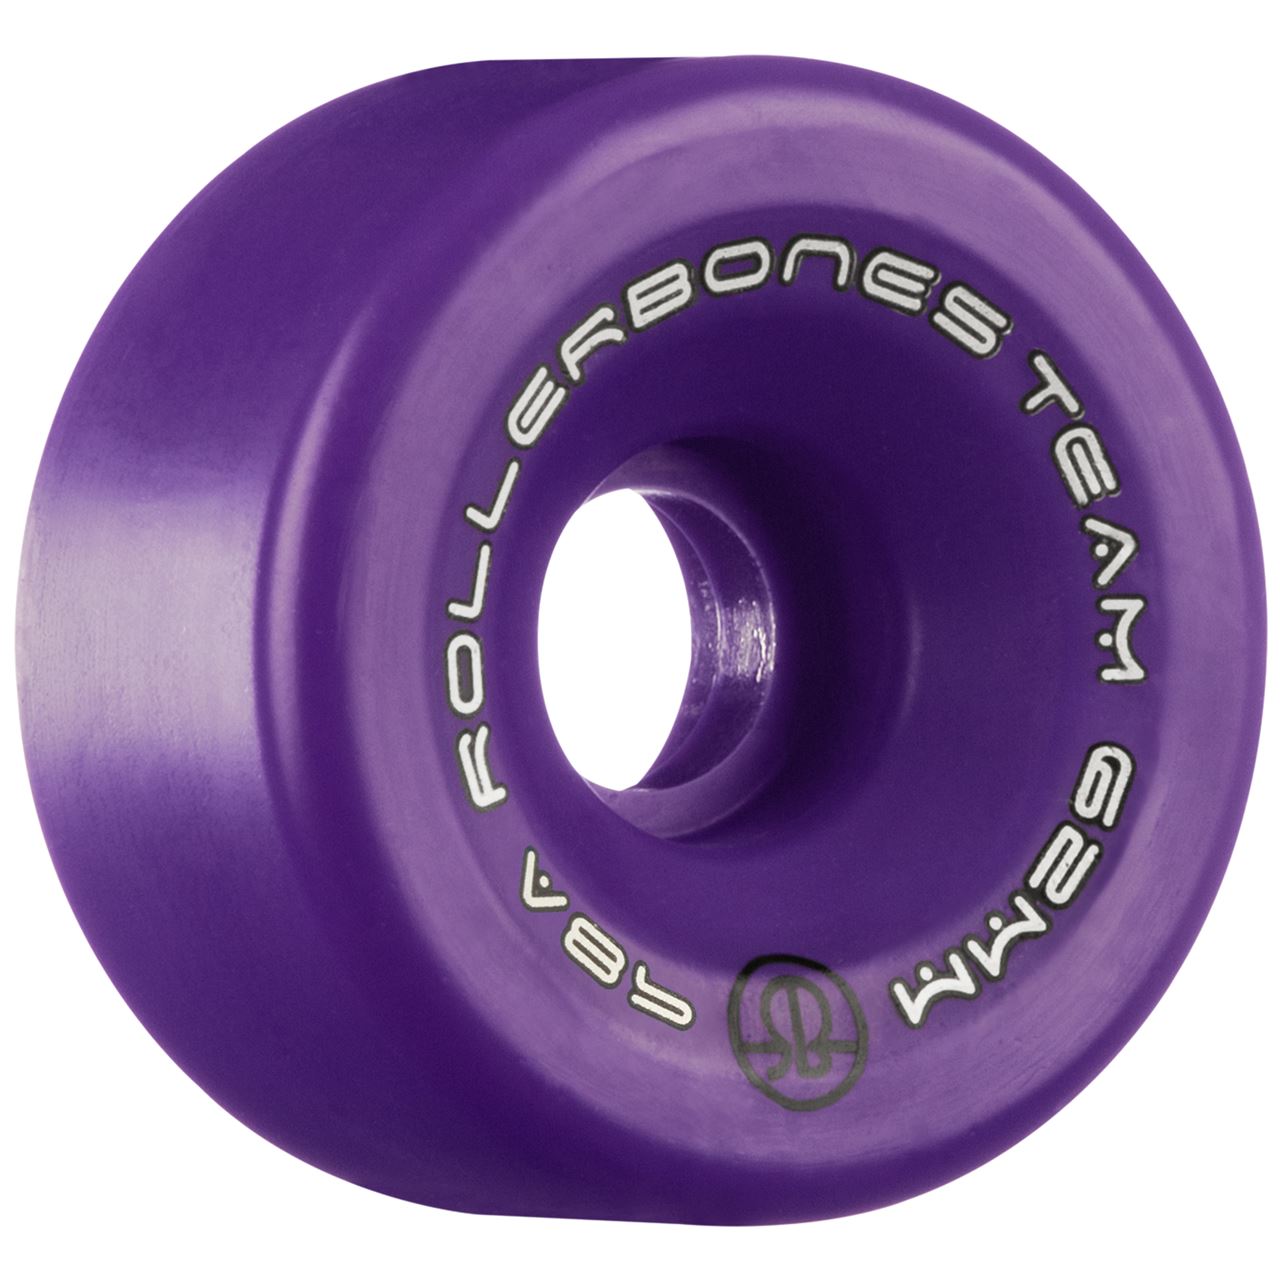 Rollerbones Team Logo Wheels Purple 62mm 98a - Set of 8